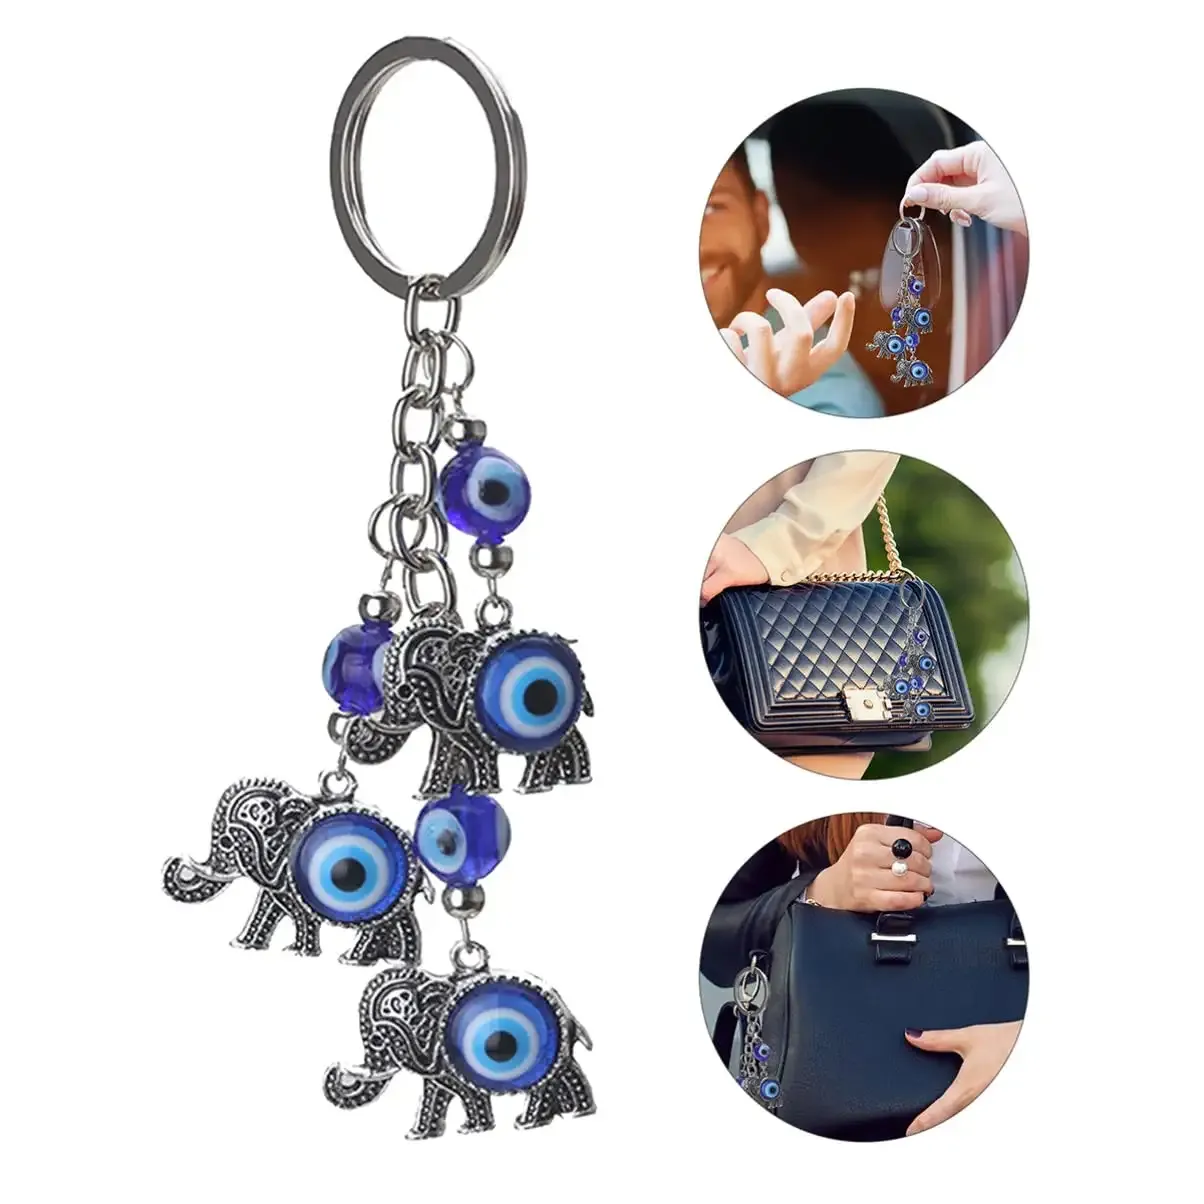 3ml keyring key chain turkish elephant blue evil eyes hanging ornament keychain pendant bag key ring blue eye pendants amulet home protection and good luck charm gift